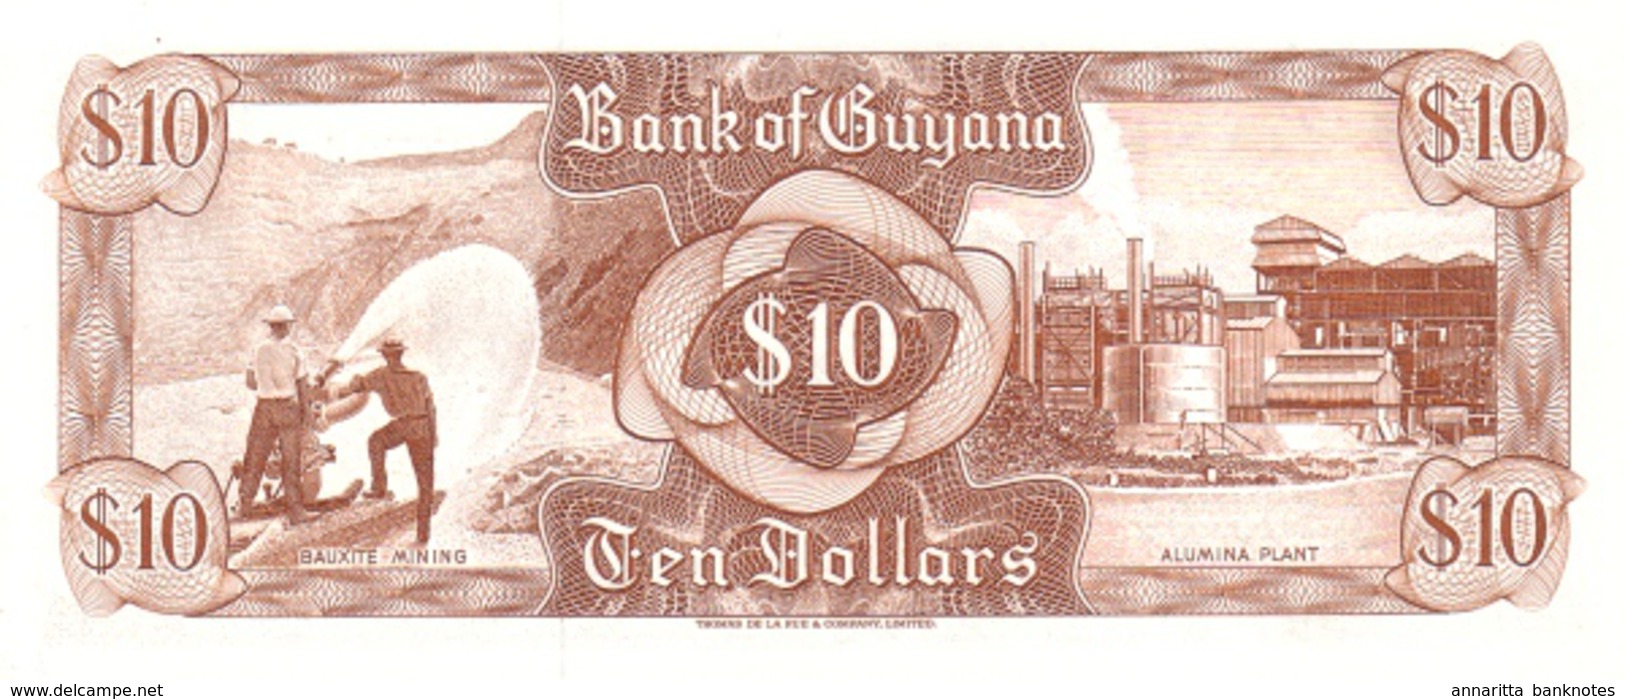 GUYANA 10 DOLLARS ND (1992) P-23f UNC  [GY103i] - Guyana